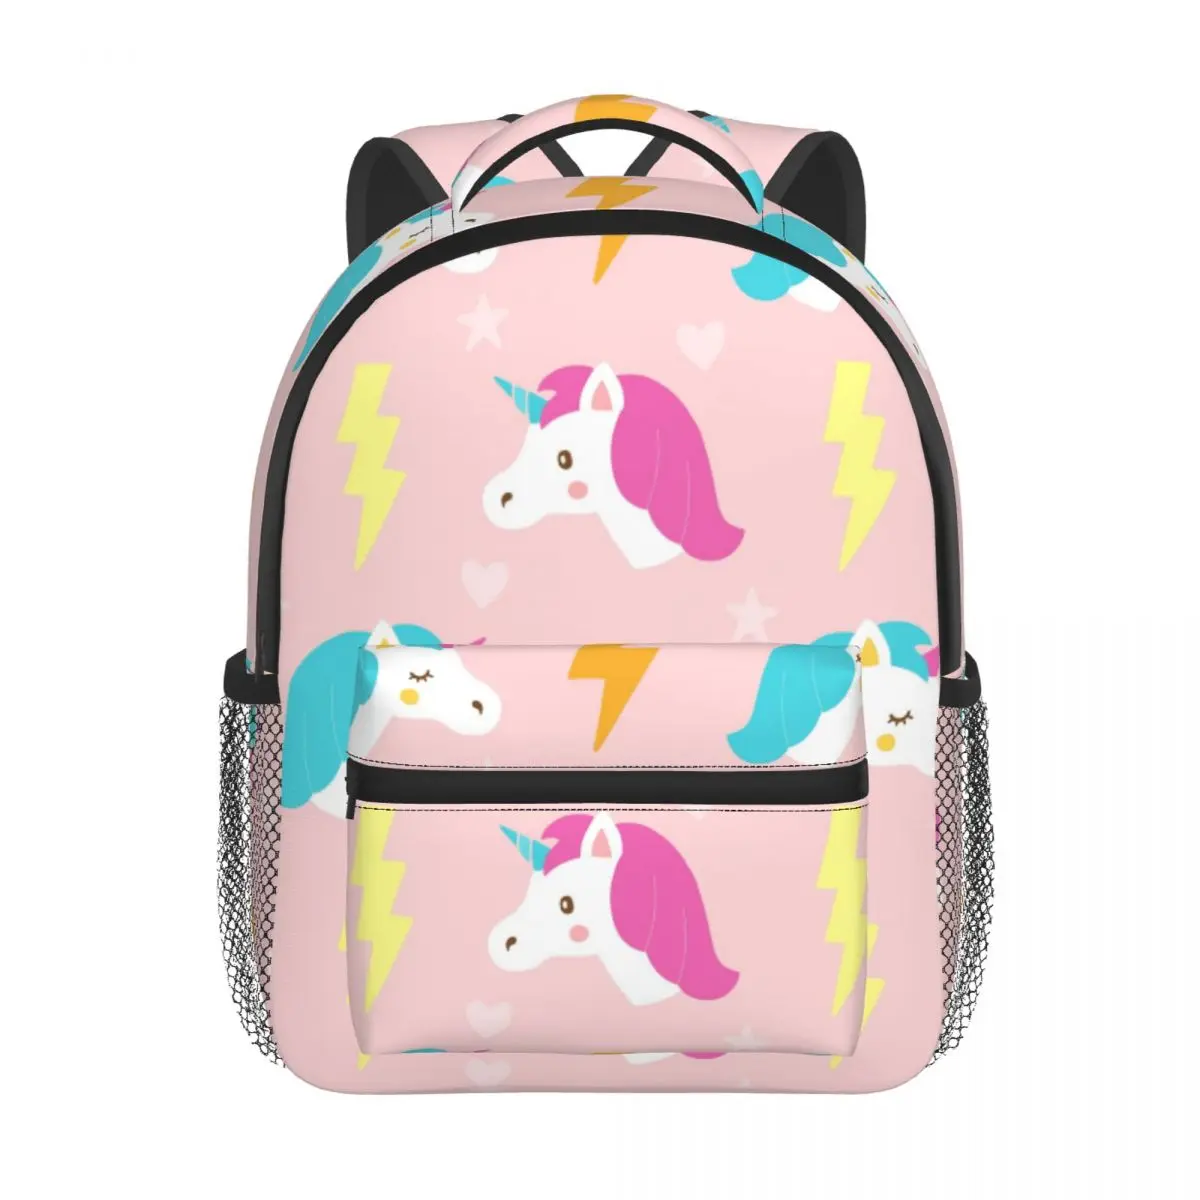 Hand Drawn Cute Unicorn With Lightning Pattern Baby Backpack Kindergarten Schoolbag Kids Children School Bag